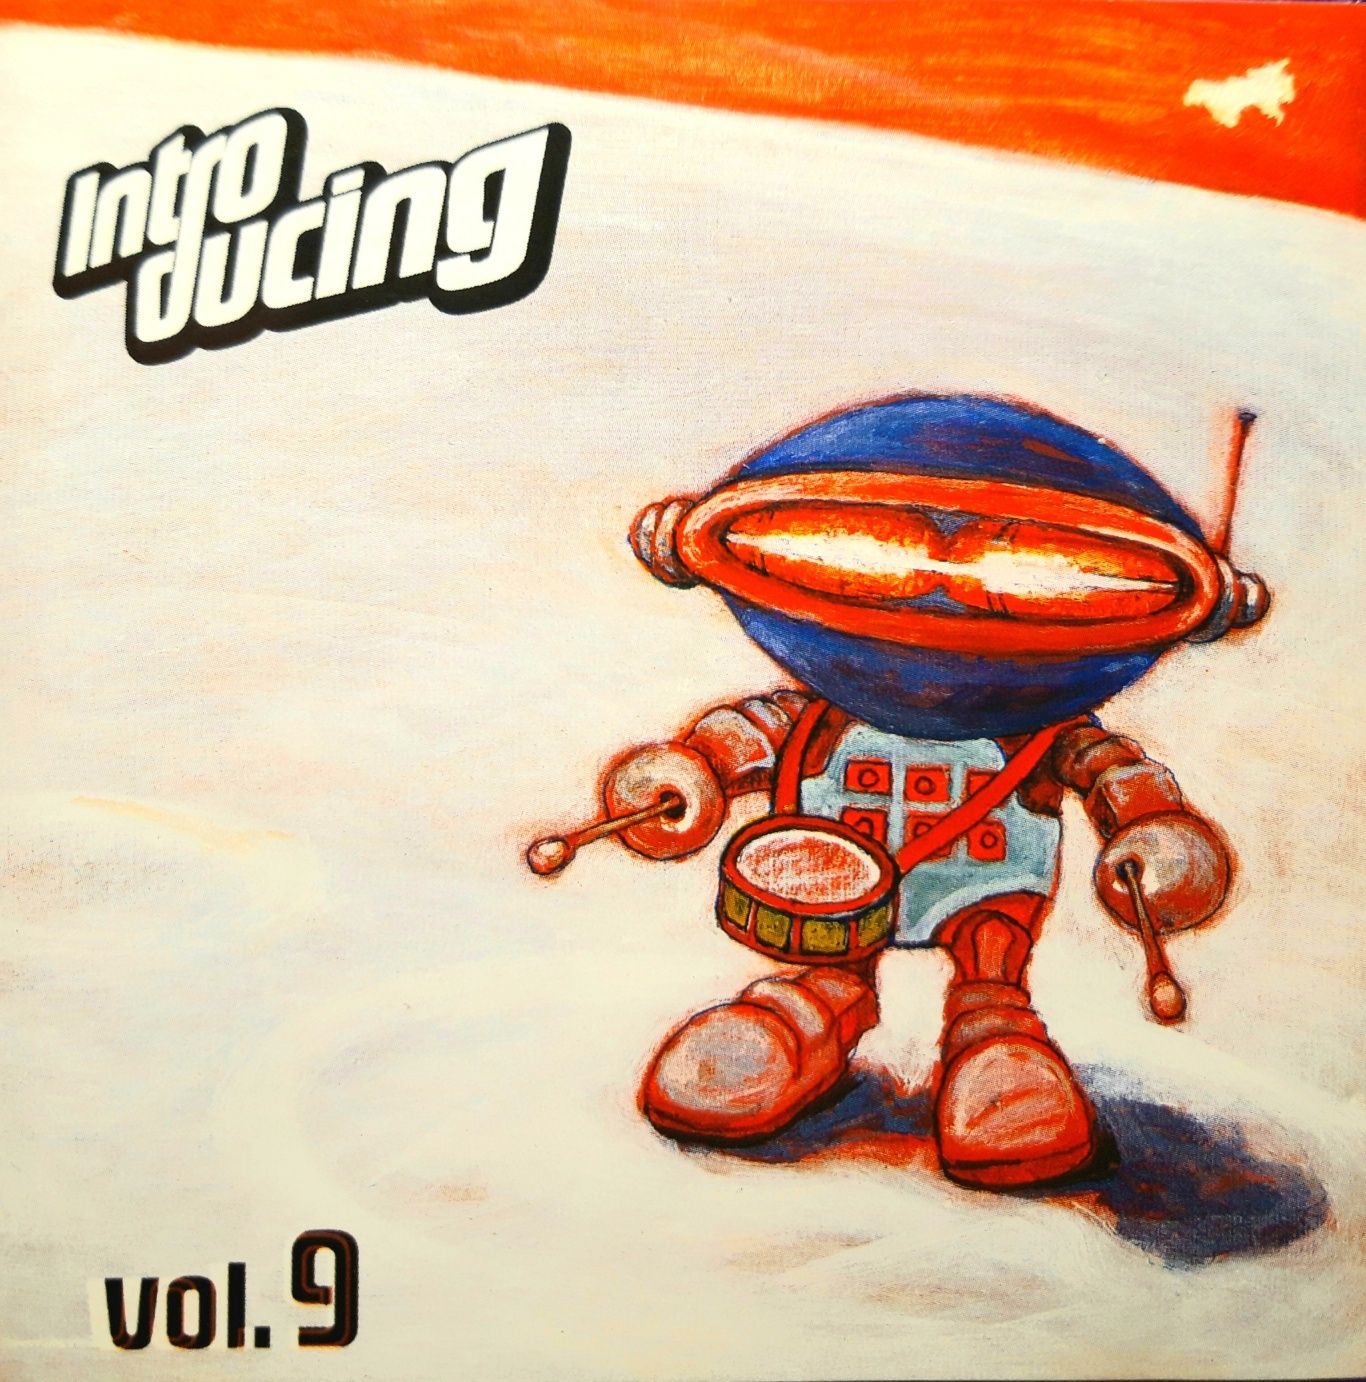 Introducing Vol. 9 (CD, 1998)